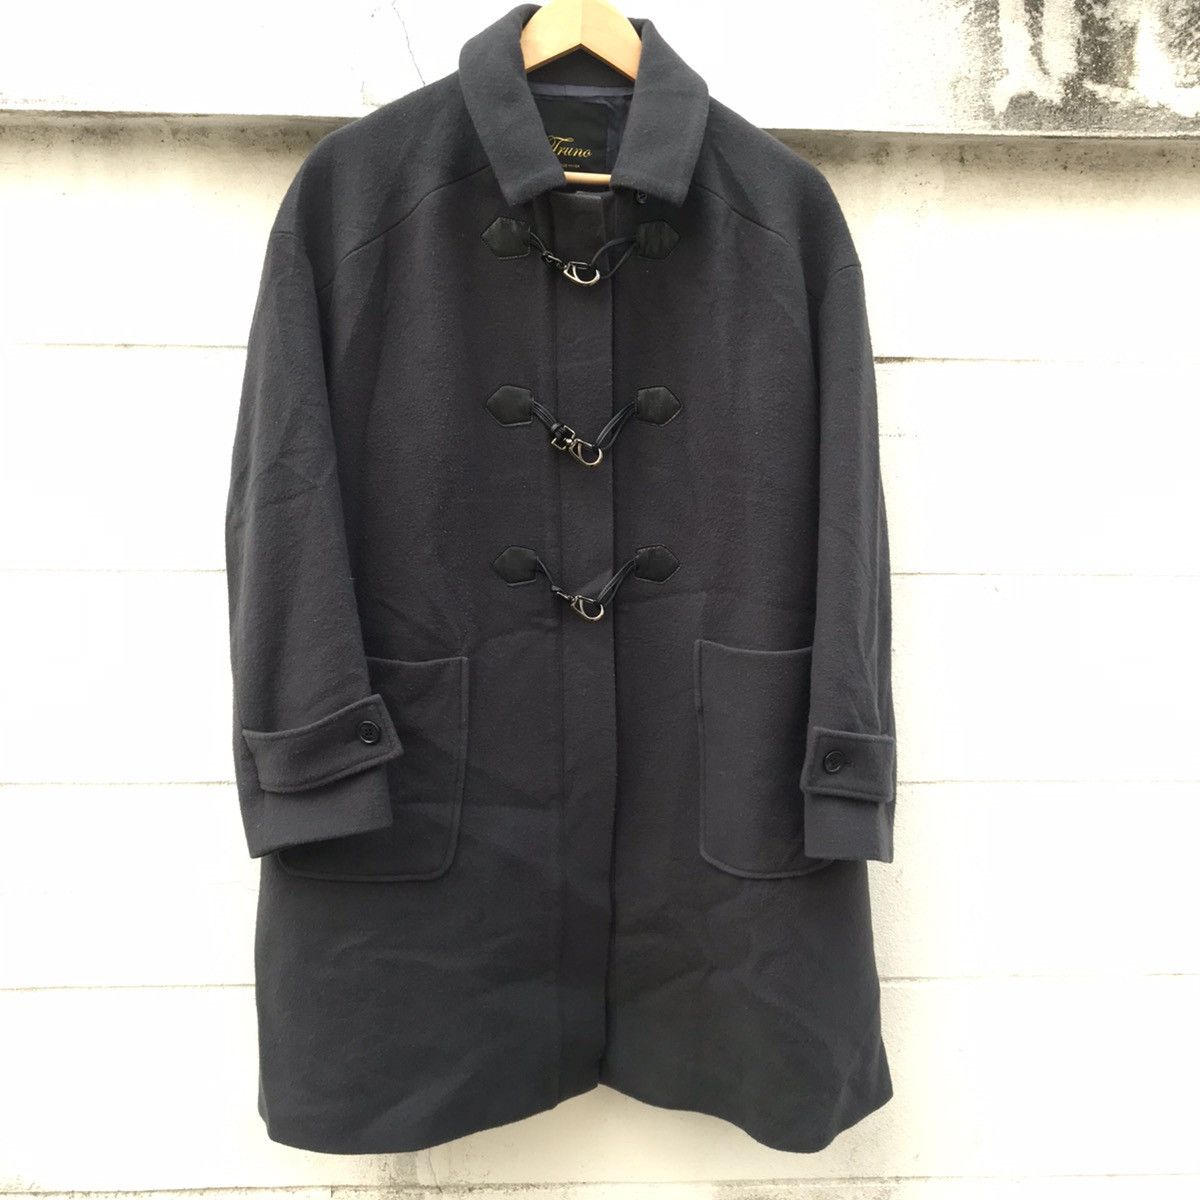 Japanese Brand - Truno by Noise Maker japan coat jacket undercover cdg - 1